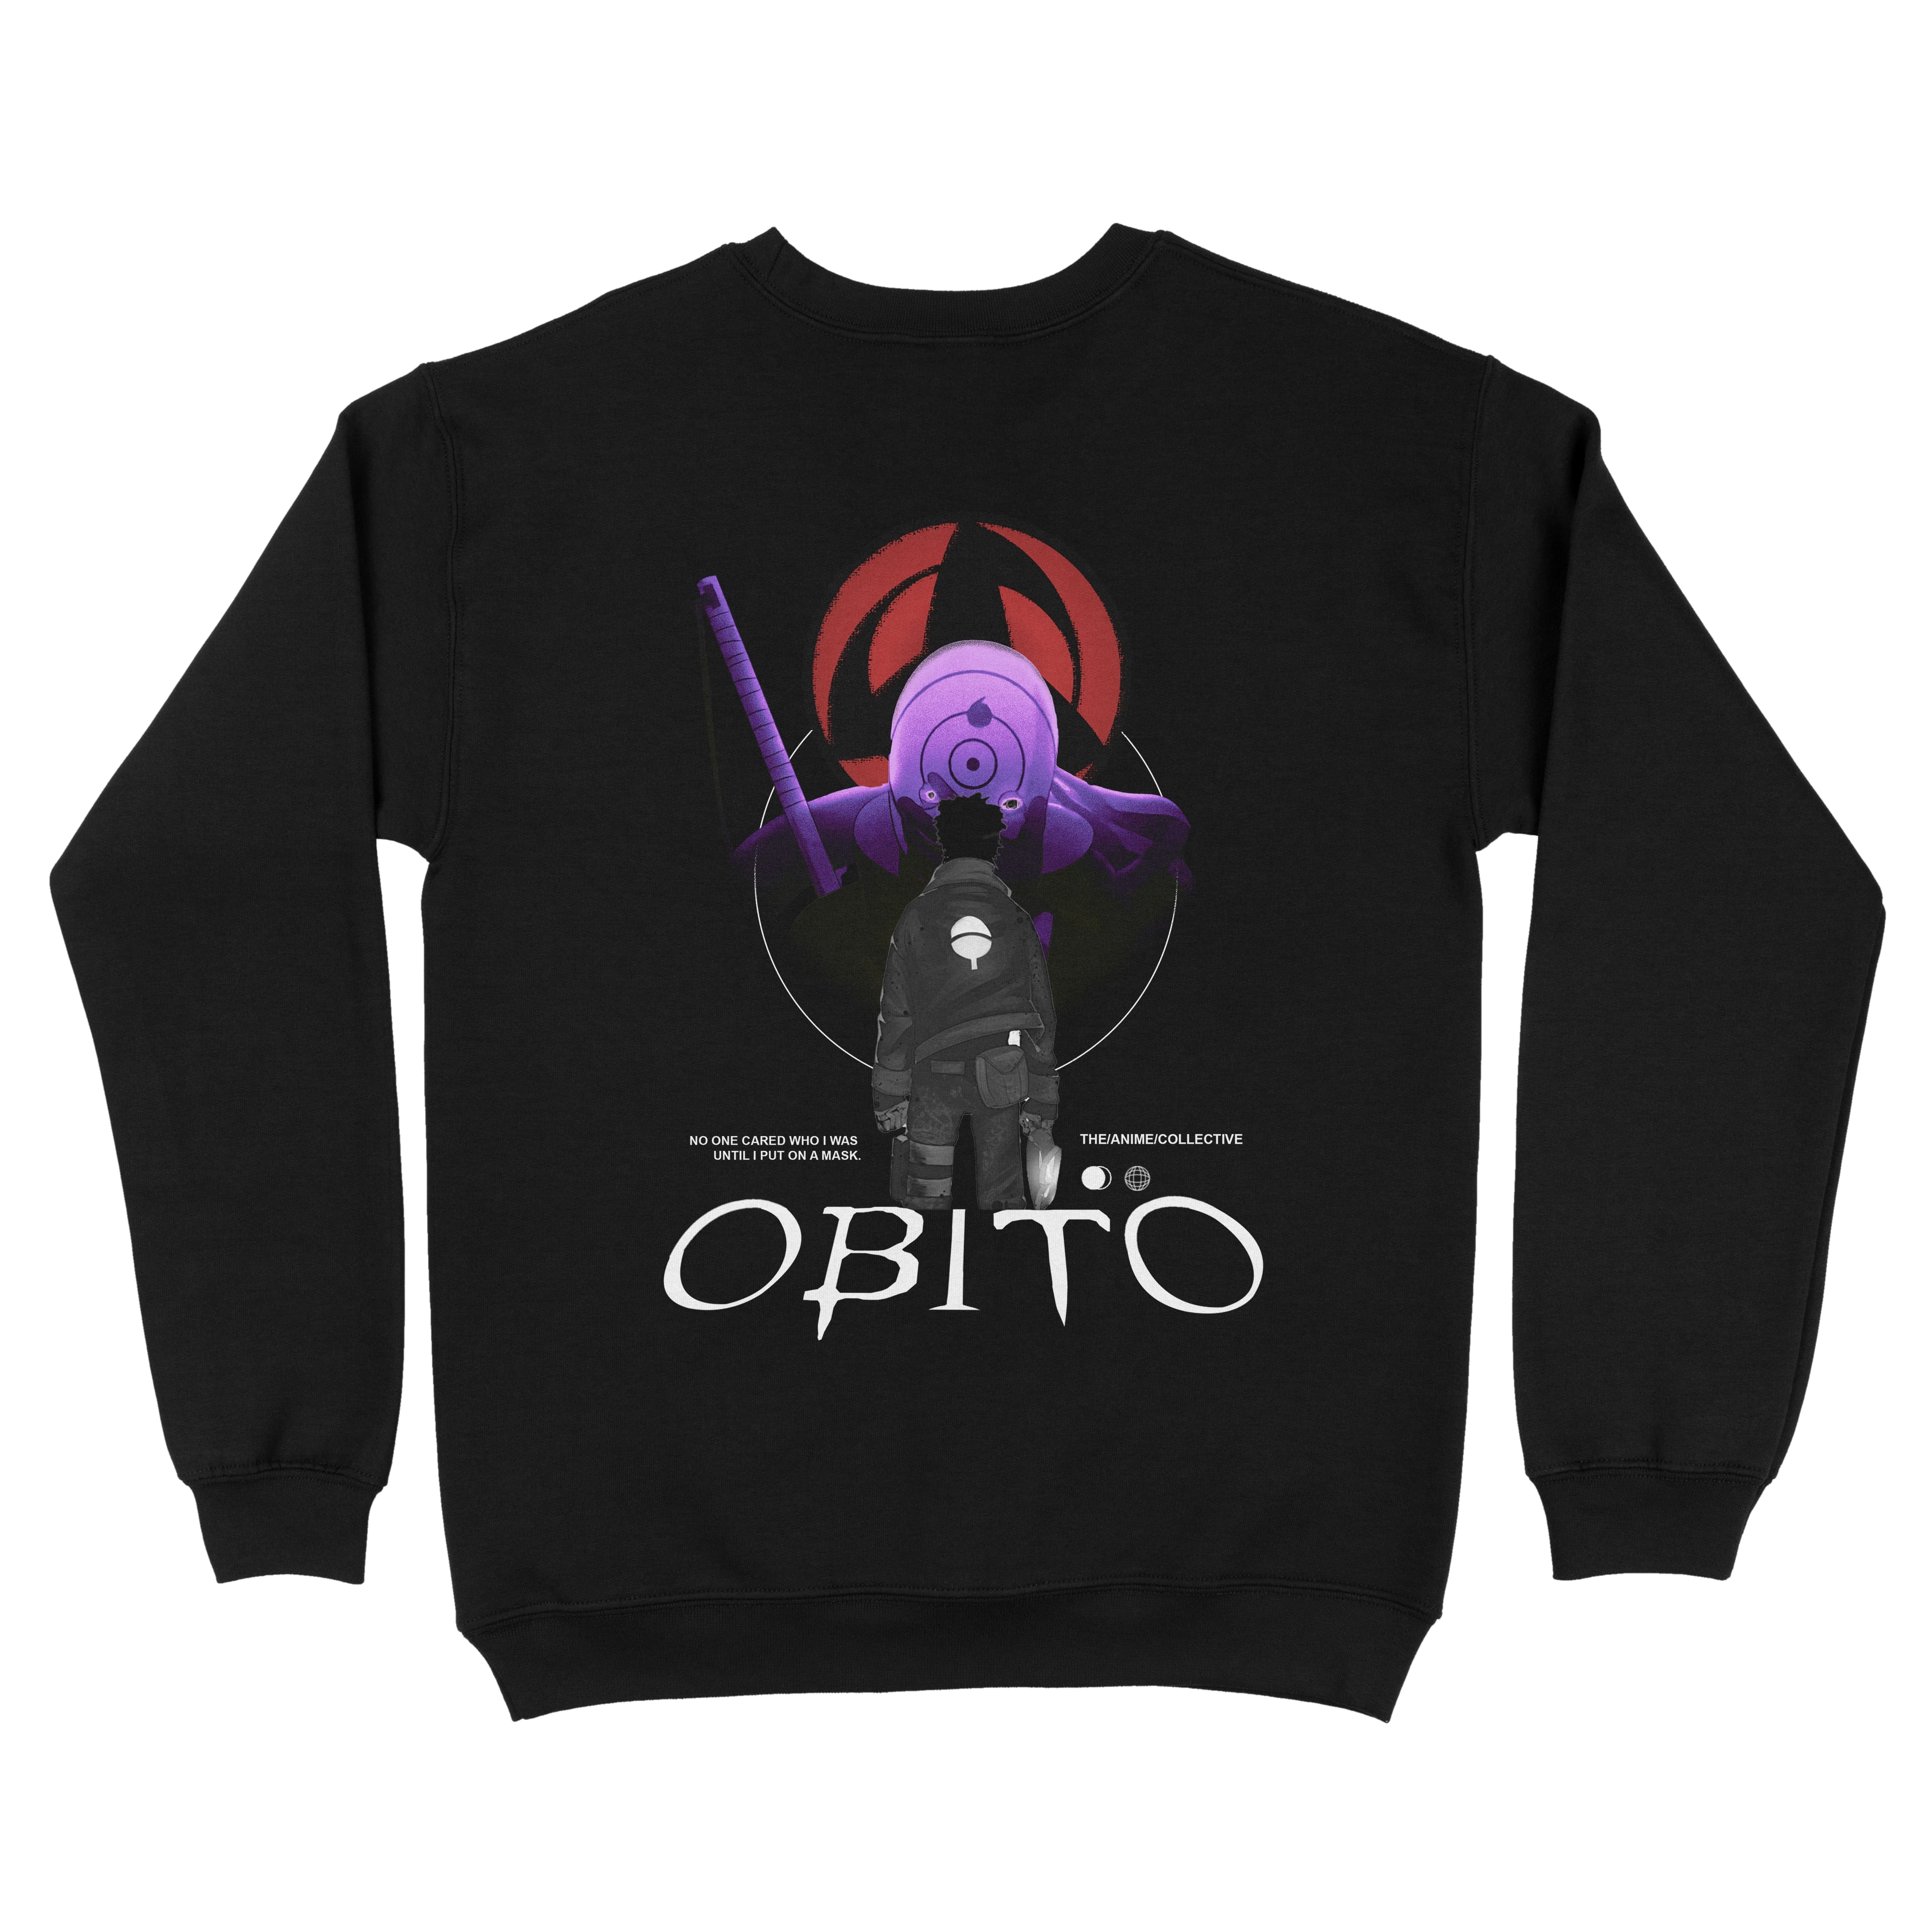 Uchiha Obito "Cursed" Sweatshirt | Naruto Shippuden